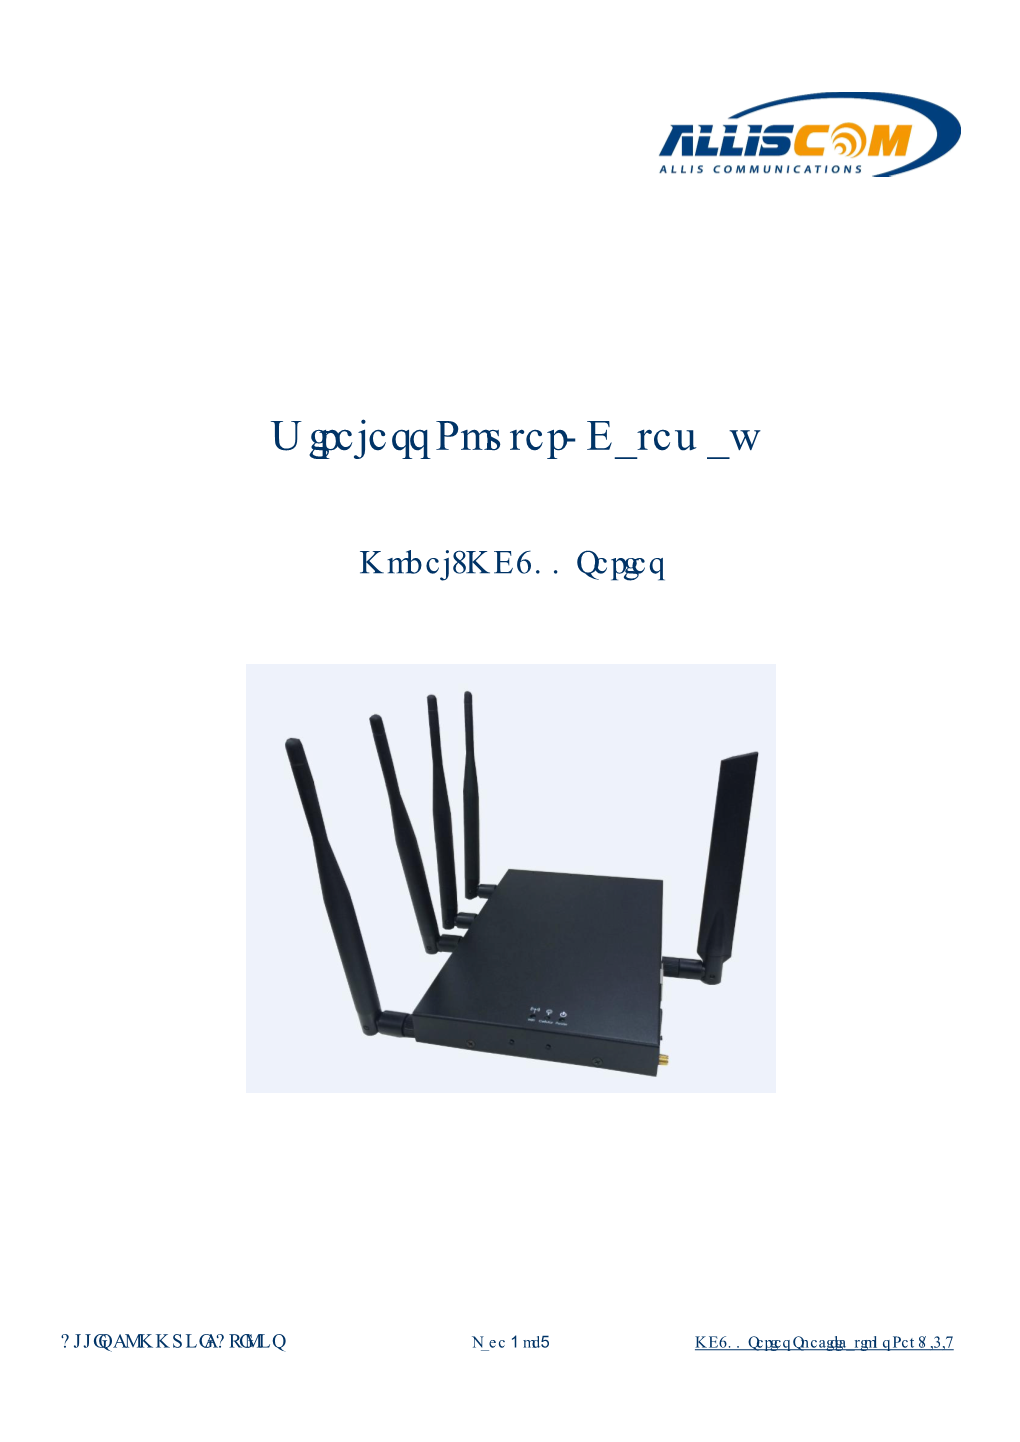 Wireless Router/ Gateway